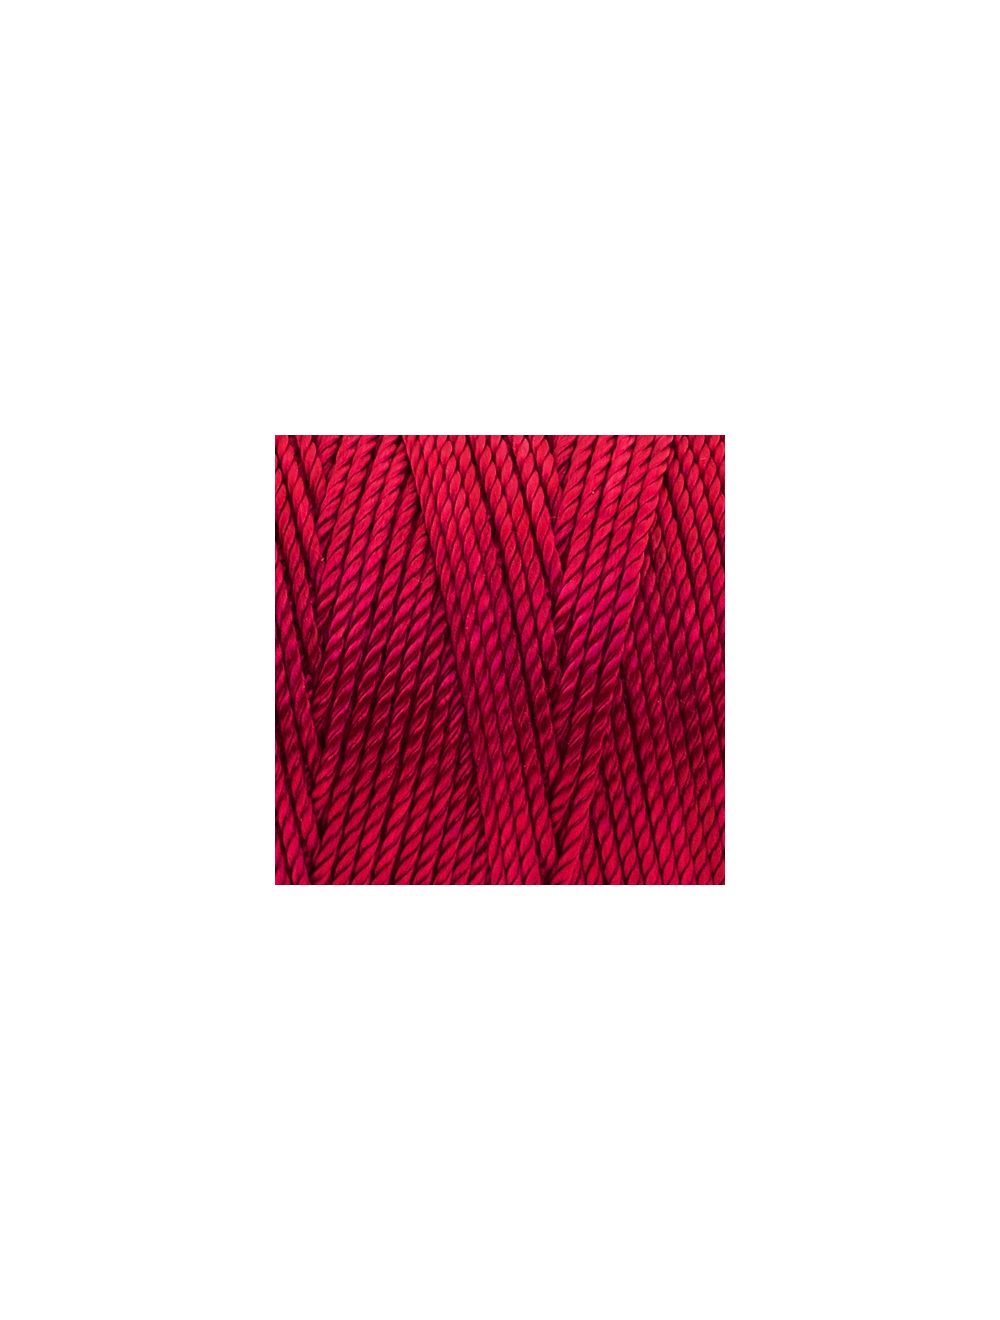 Red Heart Nylon Crochet Thread Size 18 Red